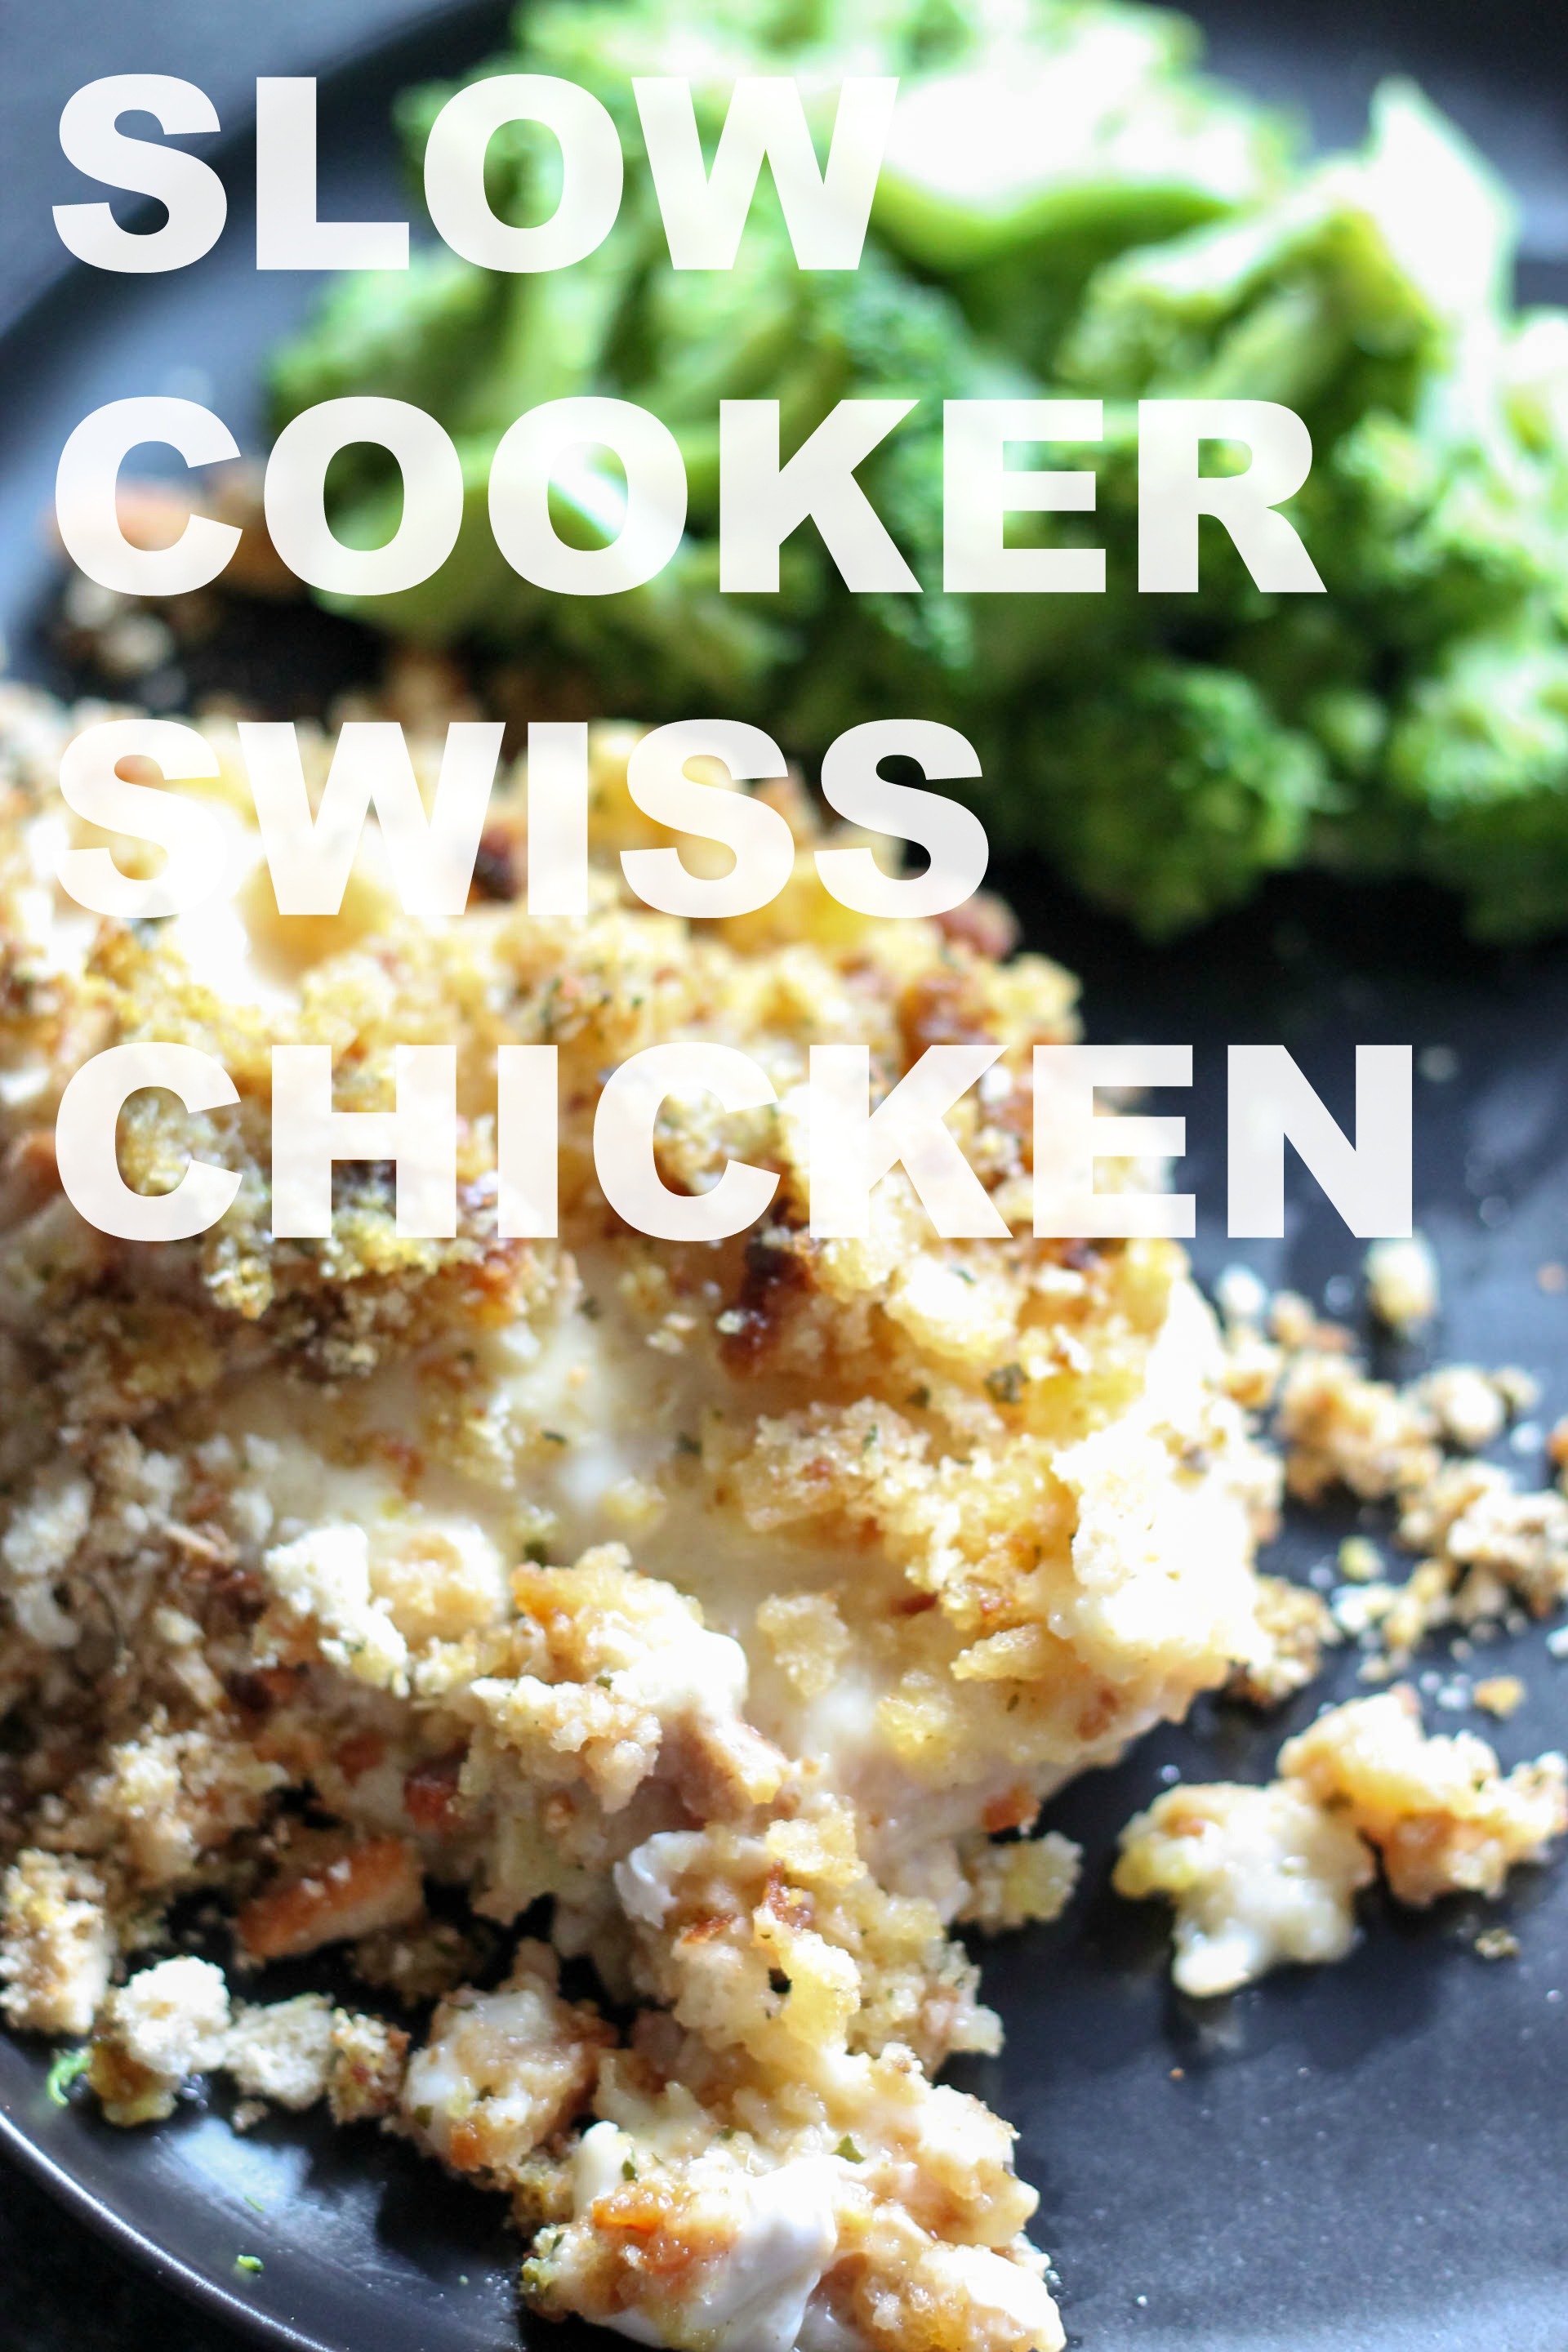 Slow Cooker Swiss Chicken